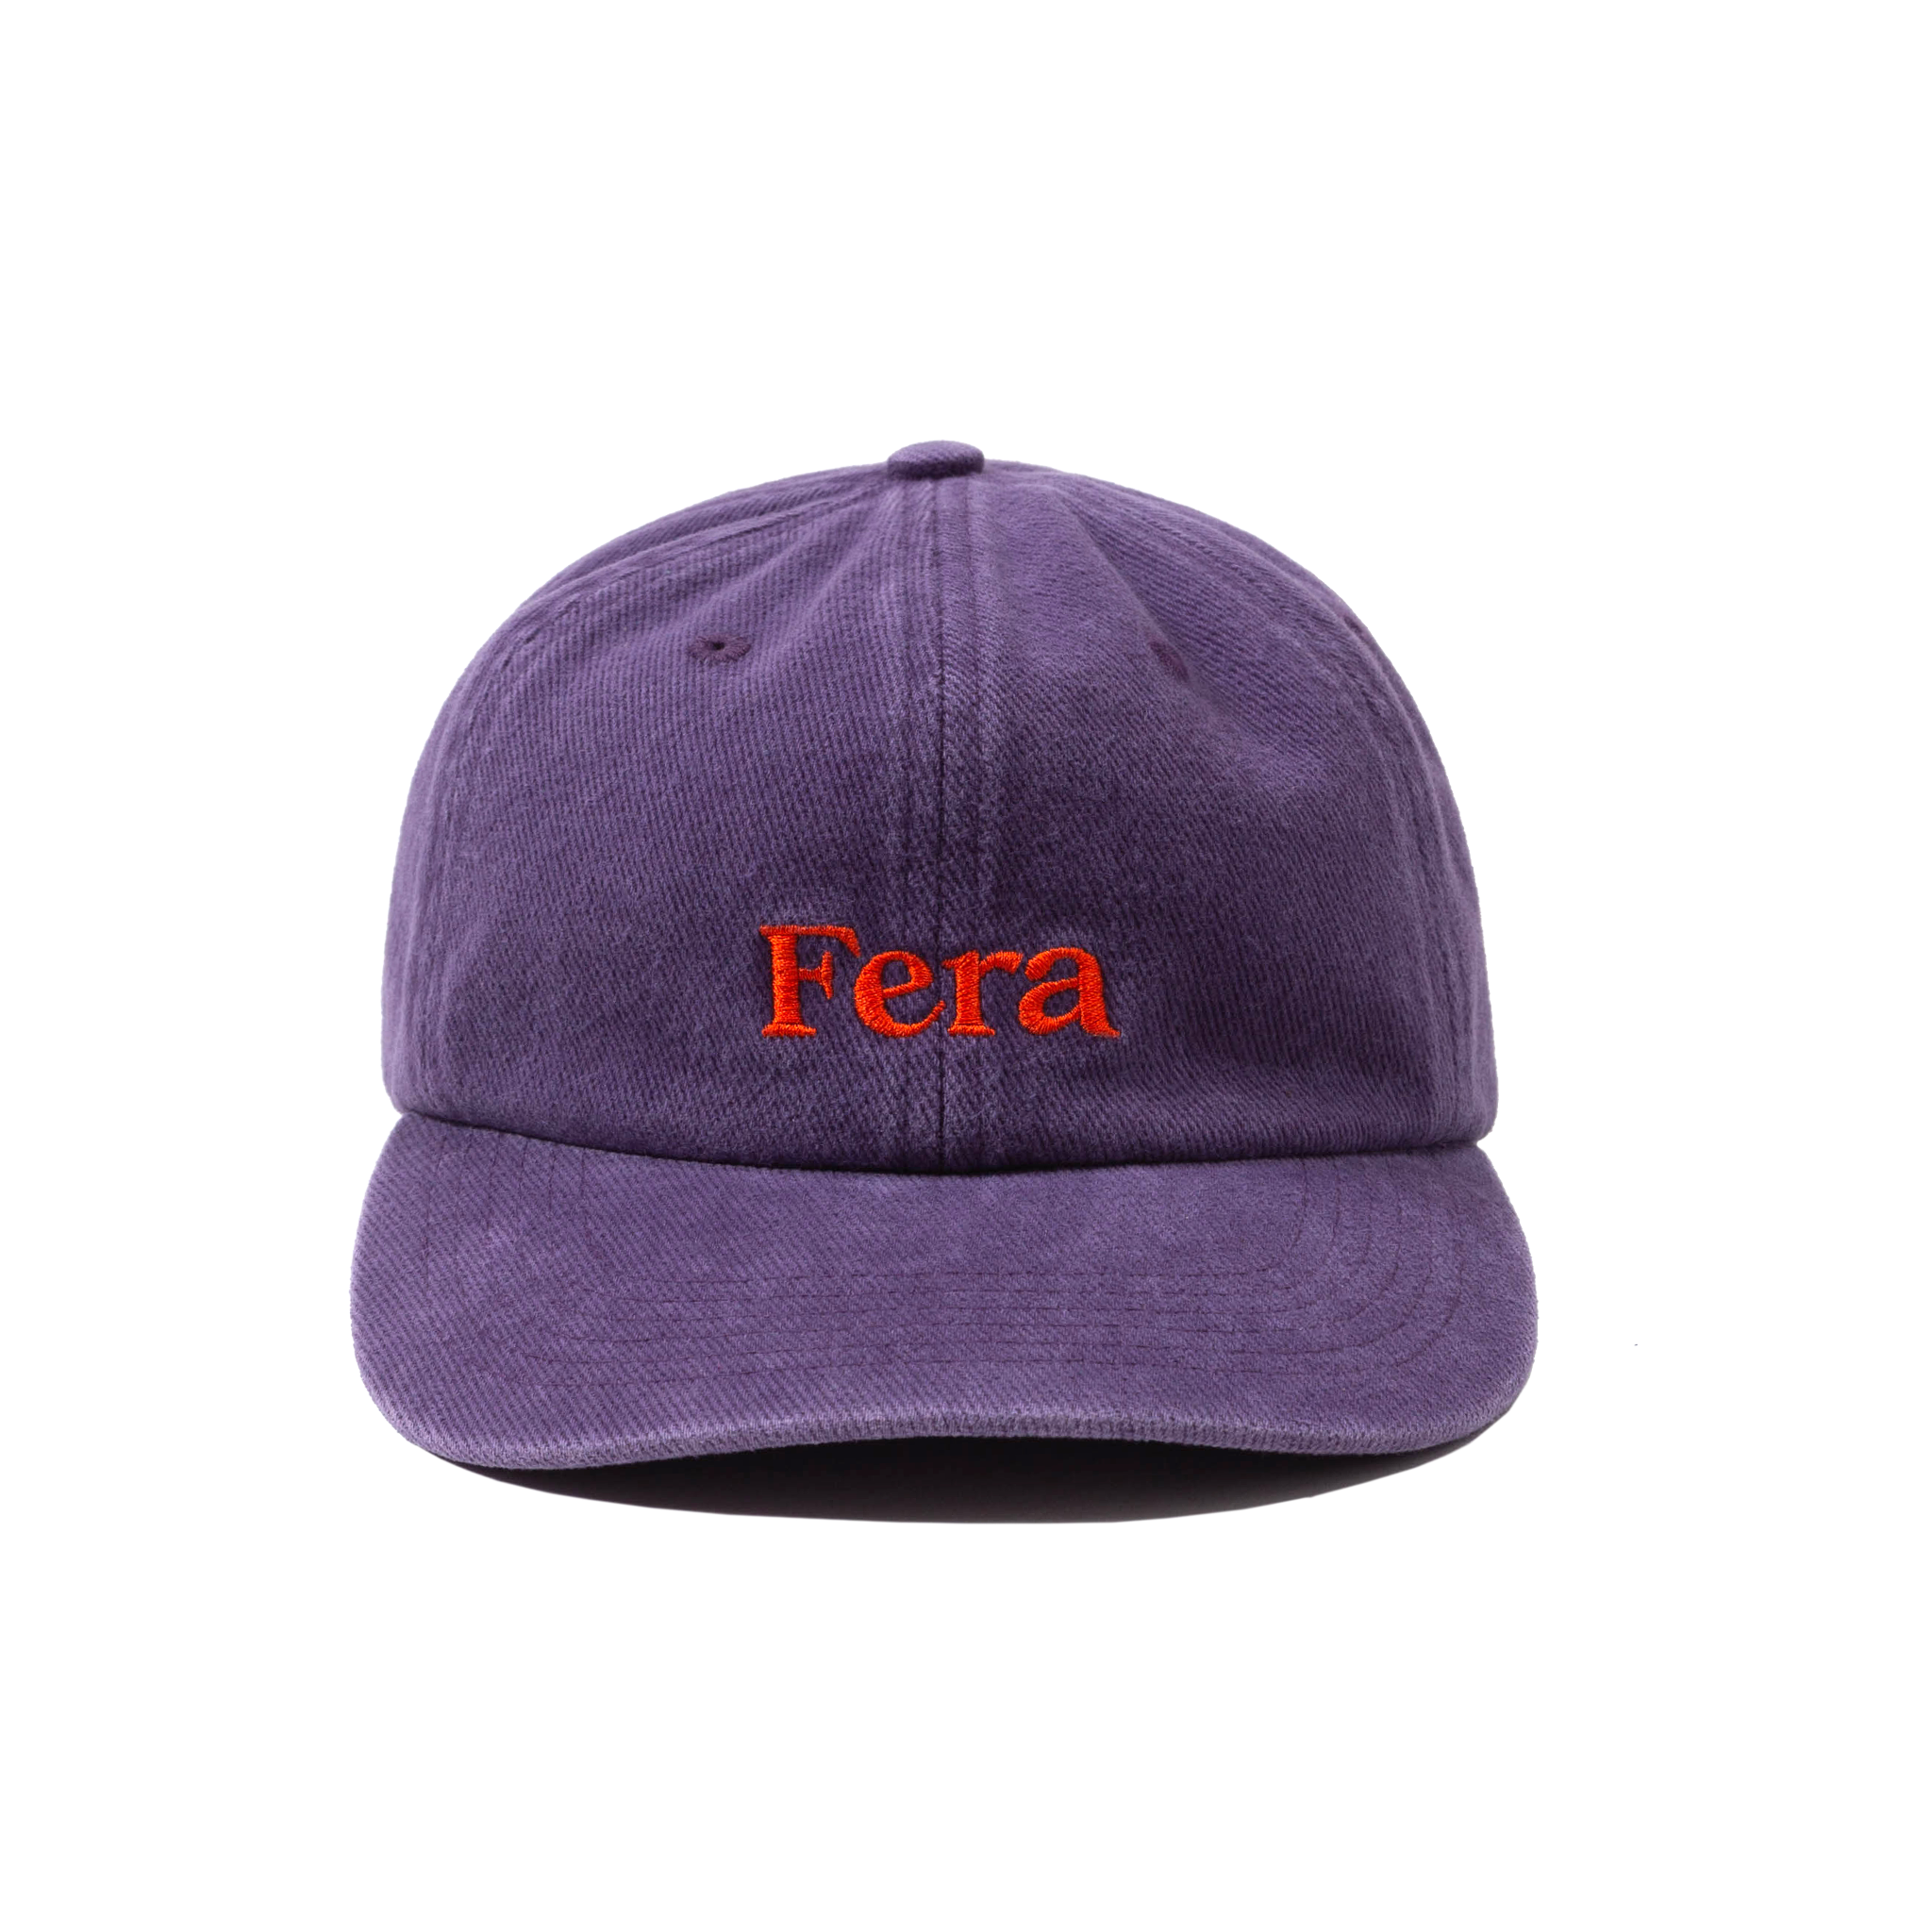 Fera Purple Cap